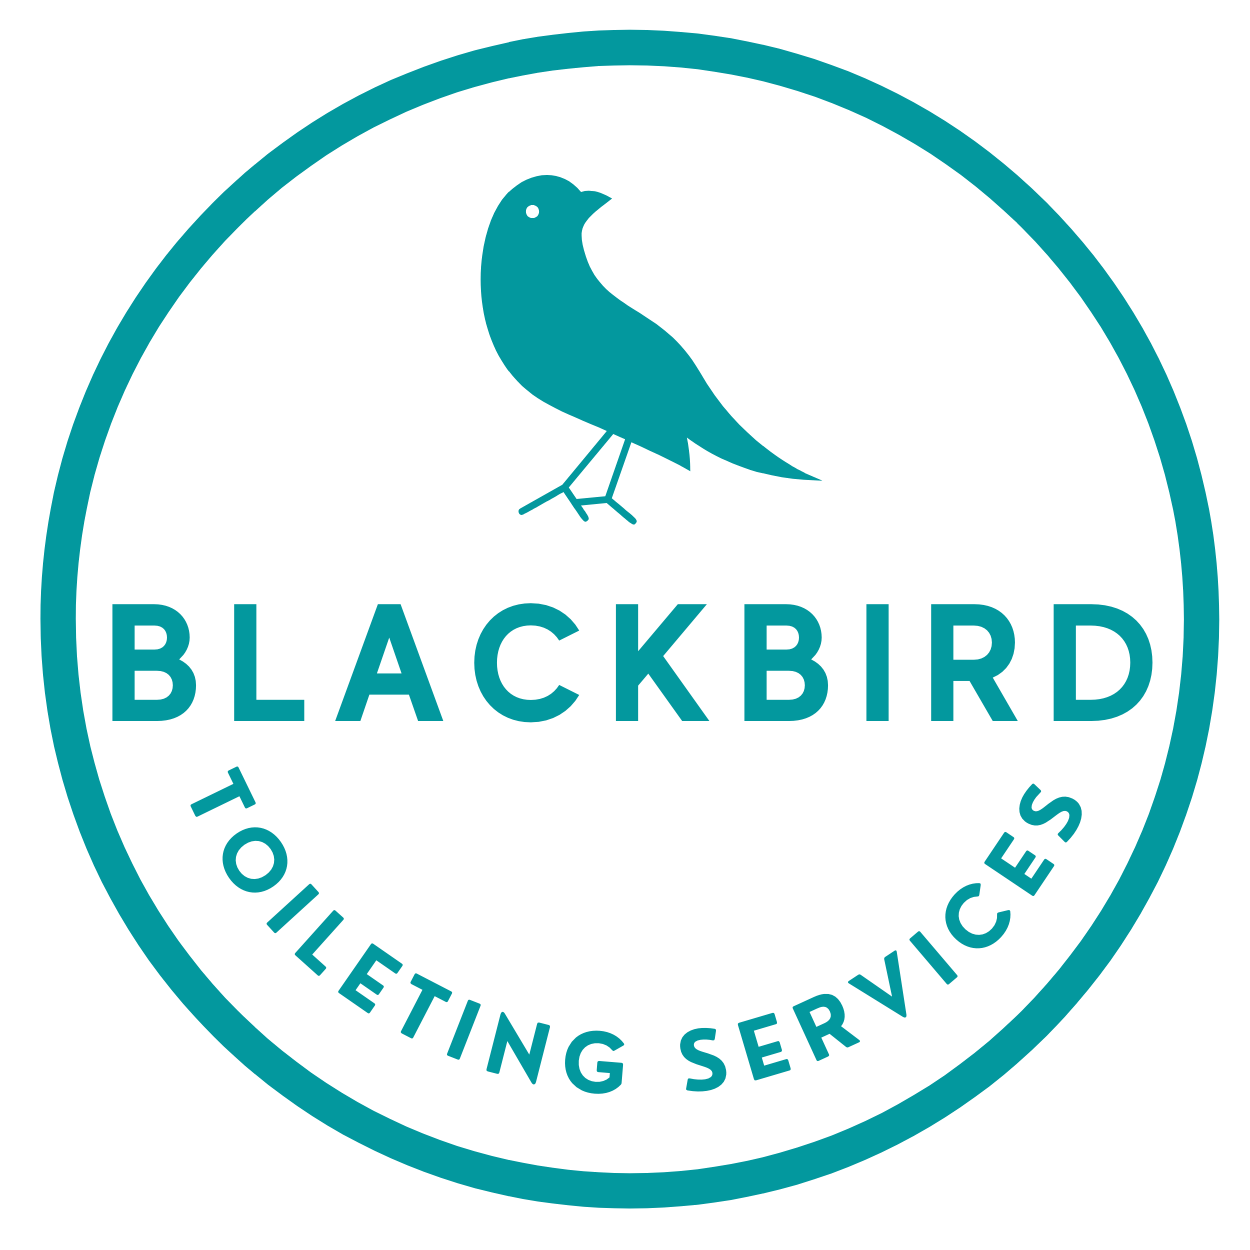 Blackbird Toileting Services